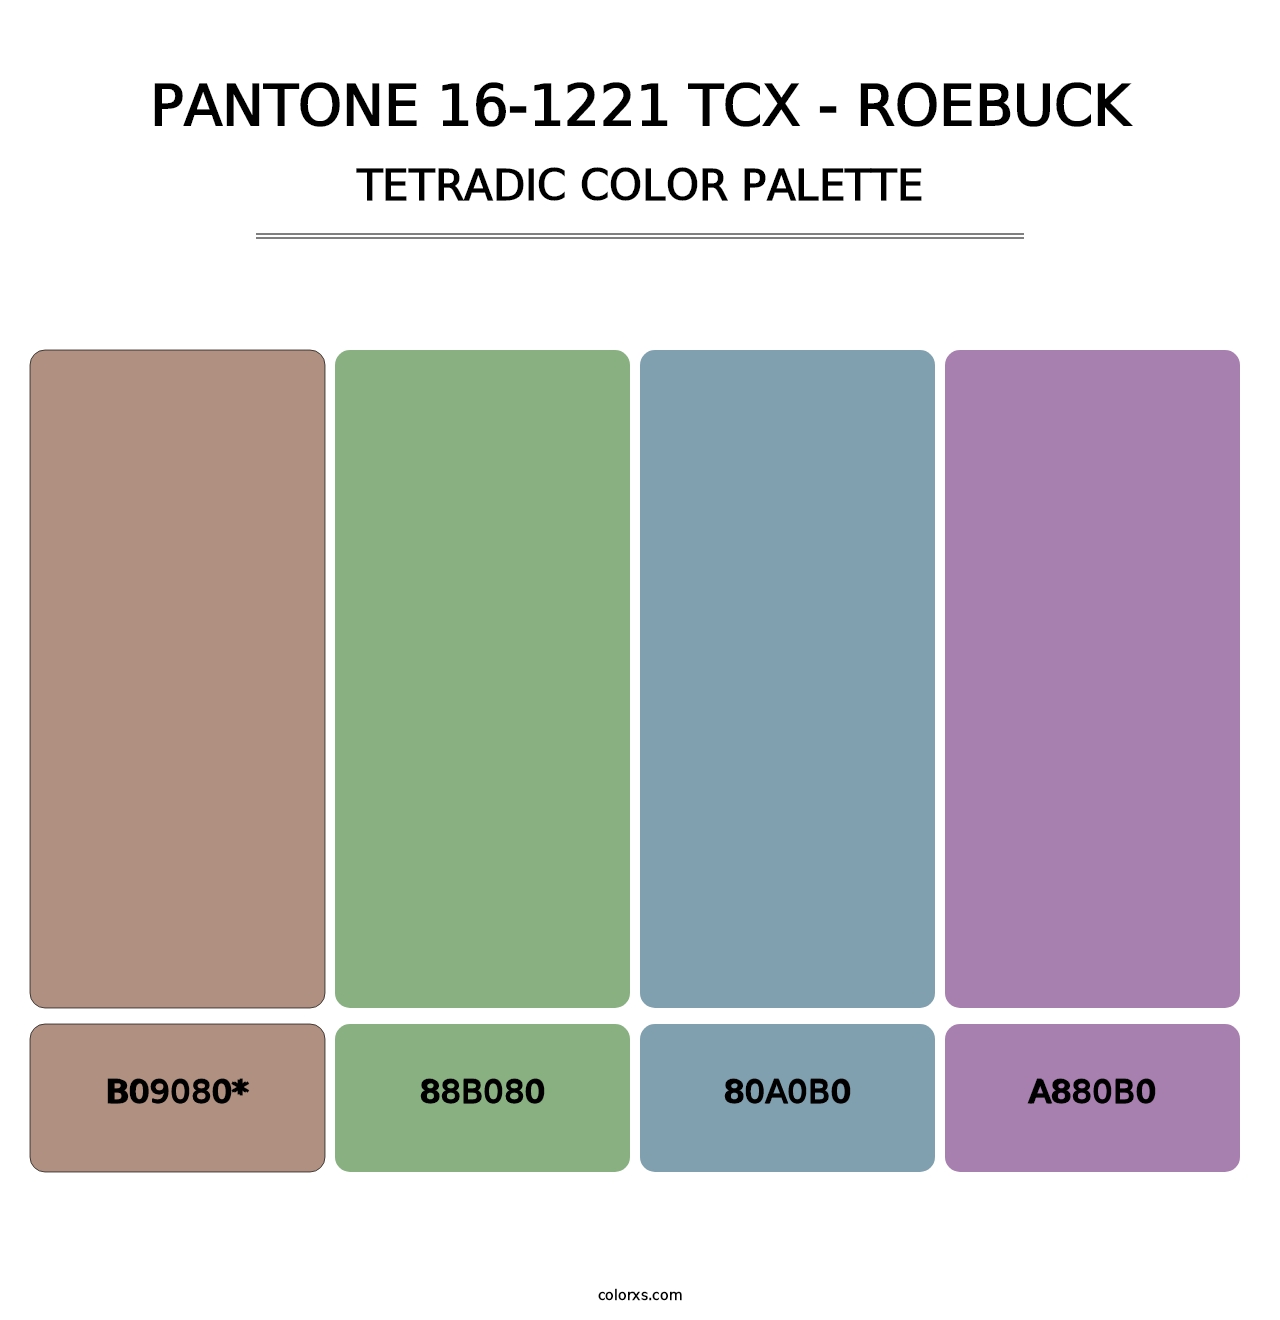 PANTONE 16-1221 TCX - Roebuck - Tetradic Color Palette